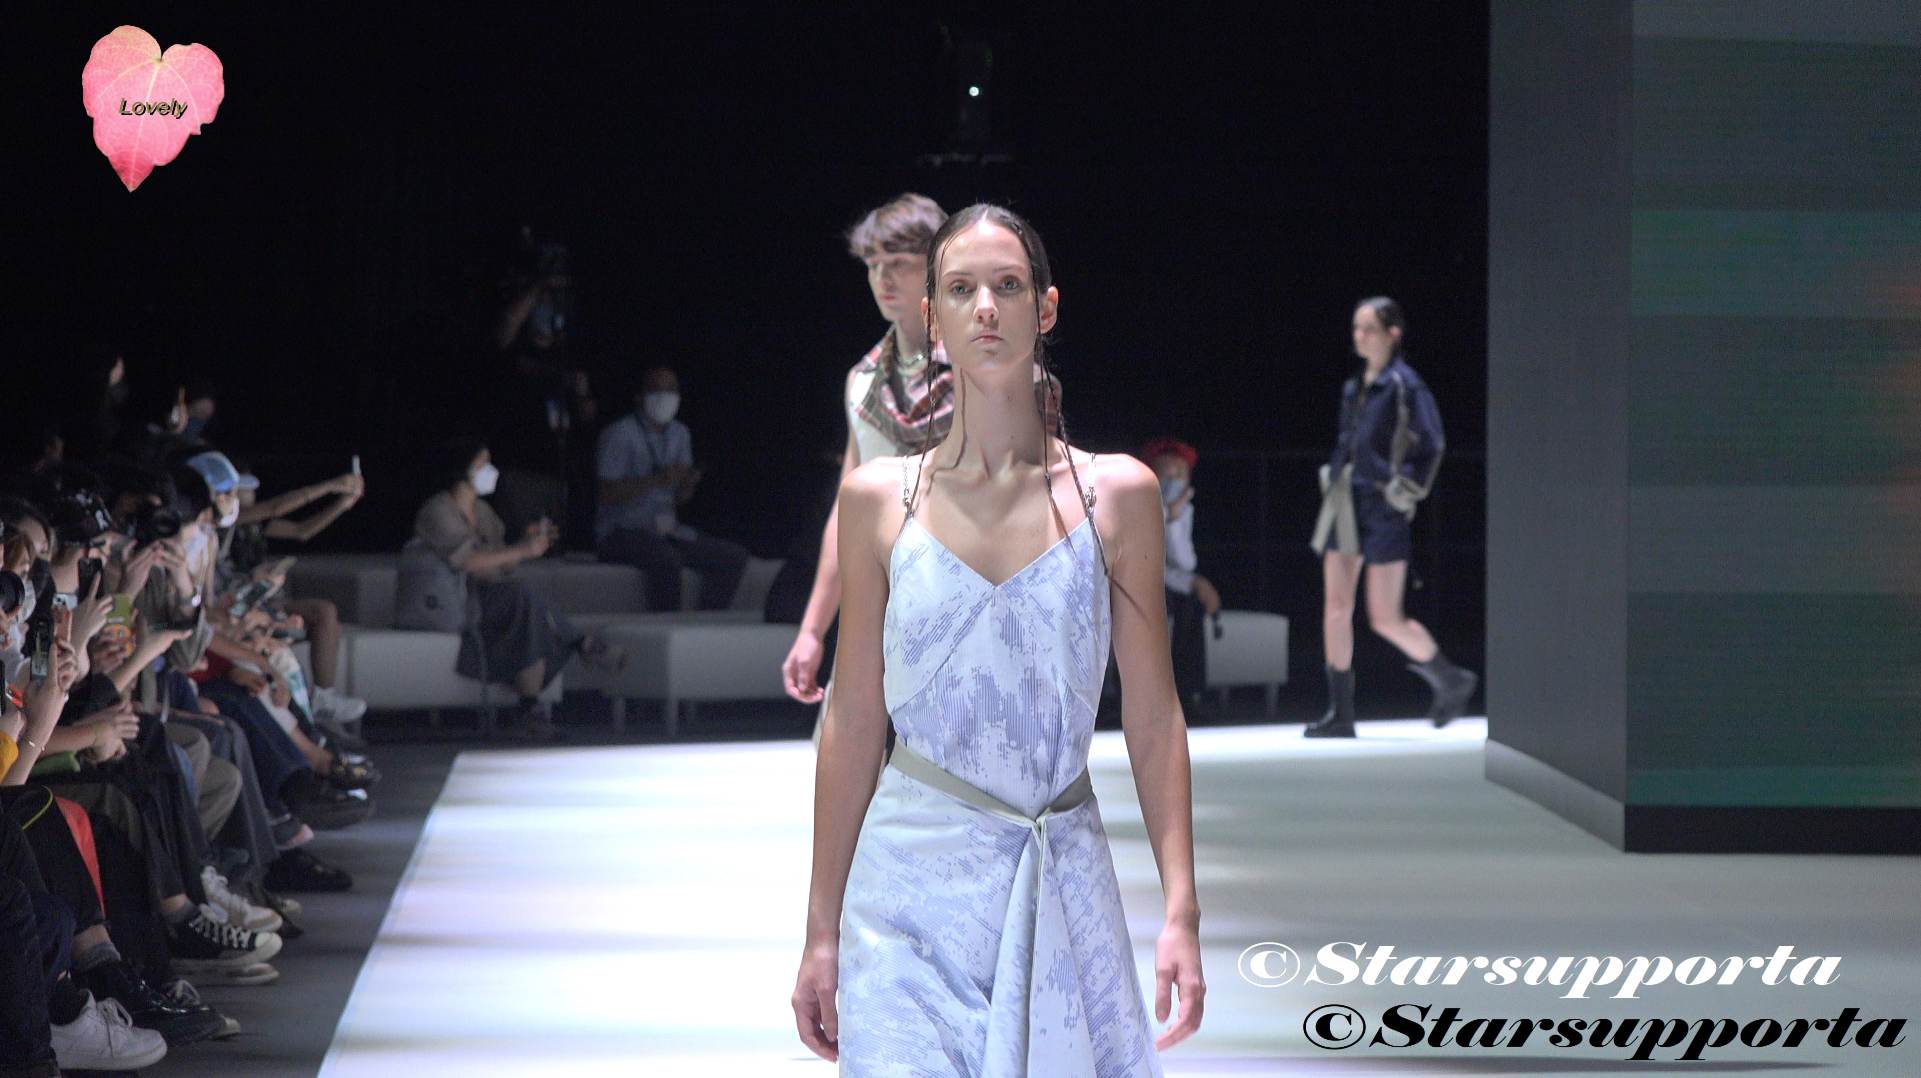 20220909 Centrestage: Fashionally Collection @ 香港會議展覽中心